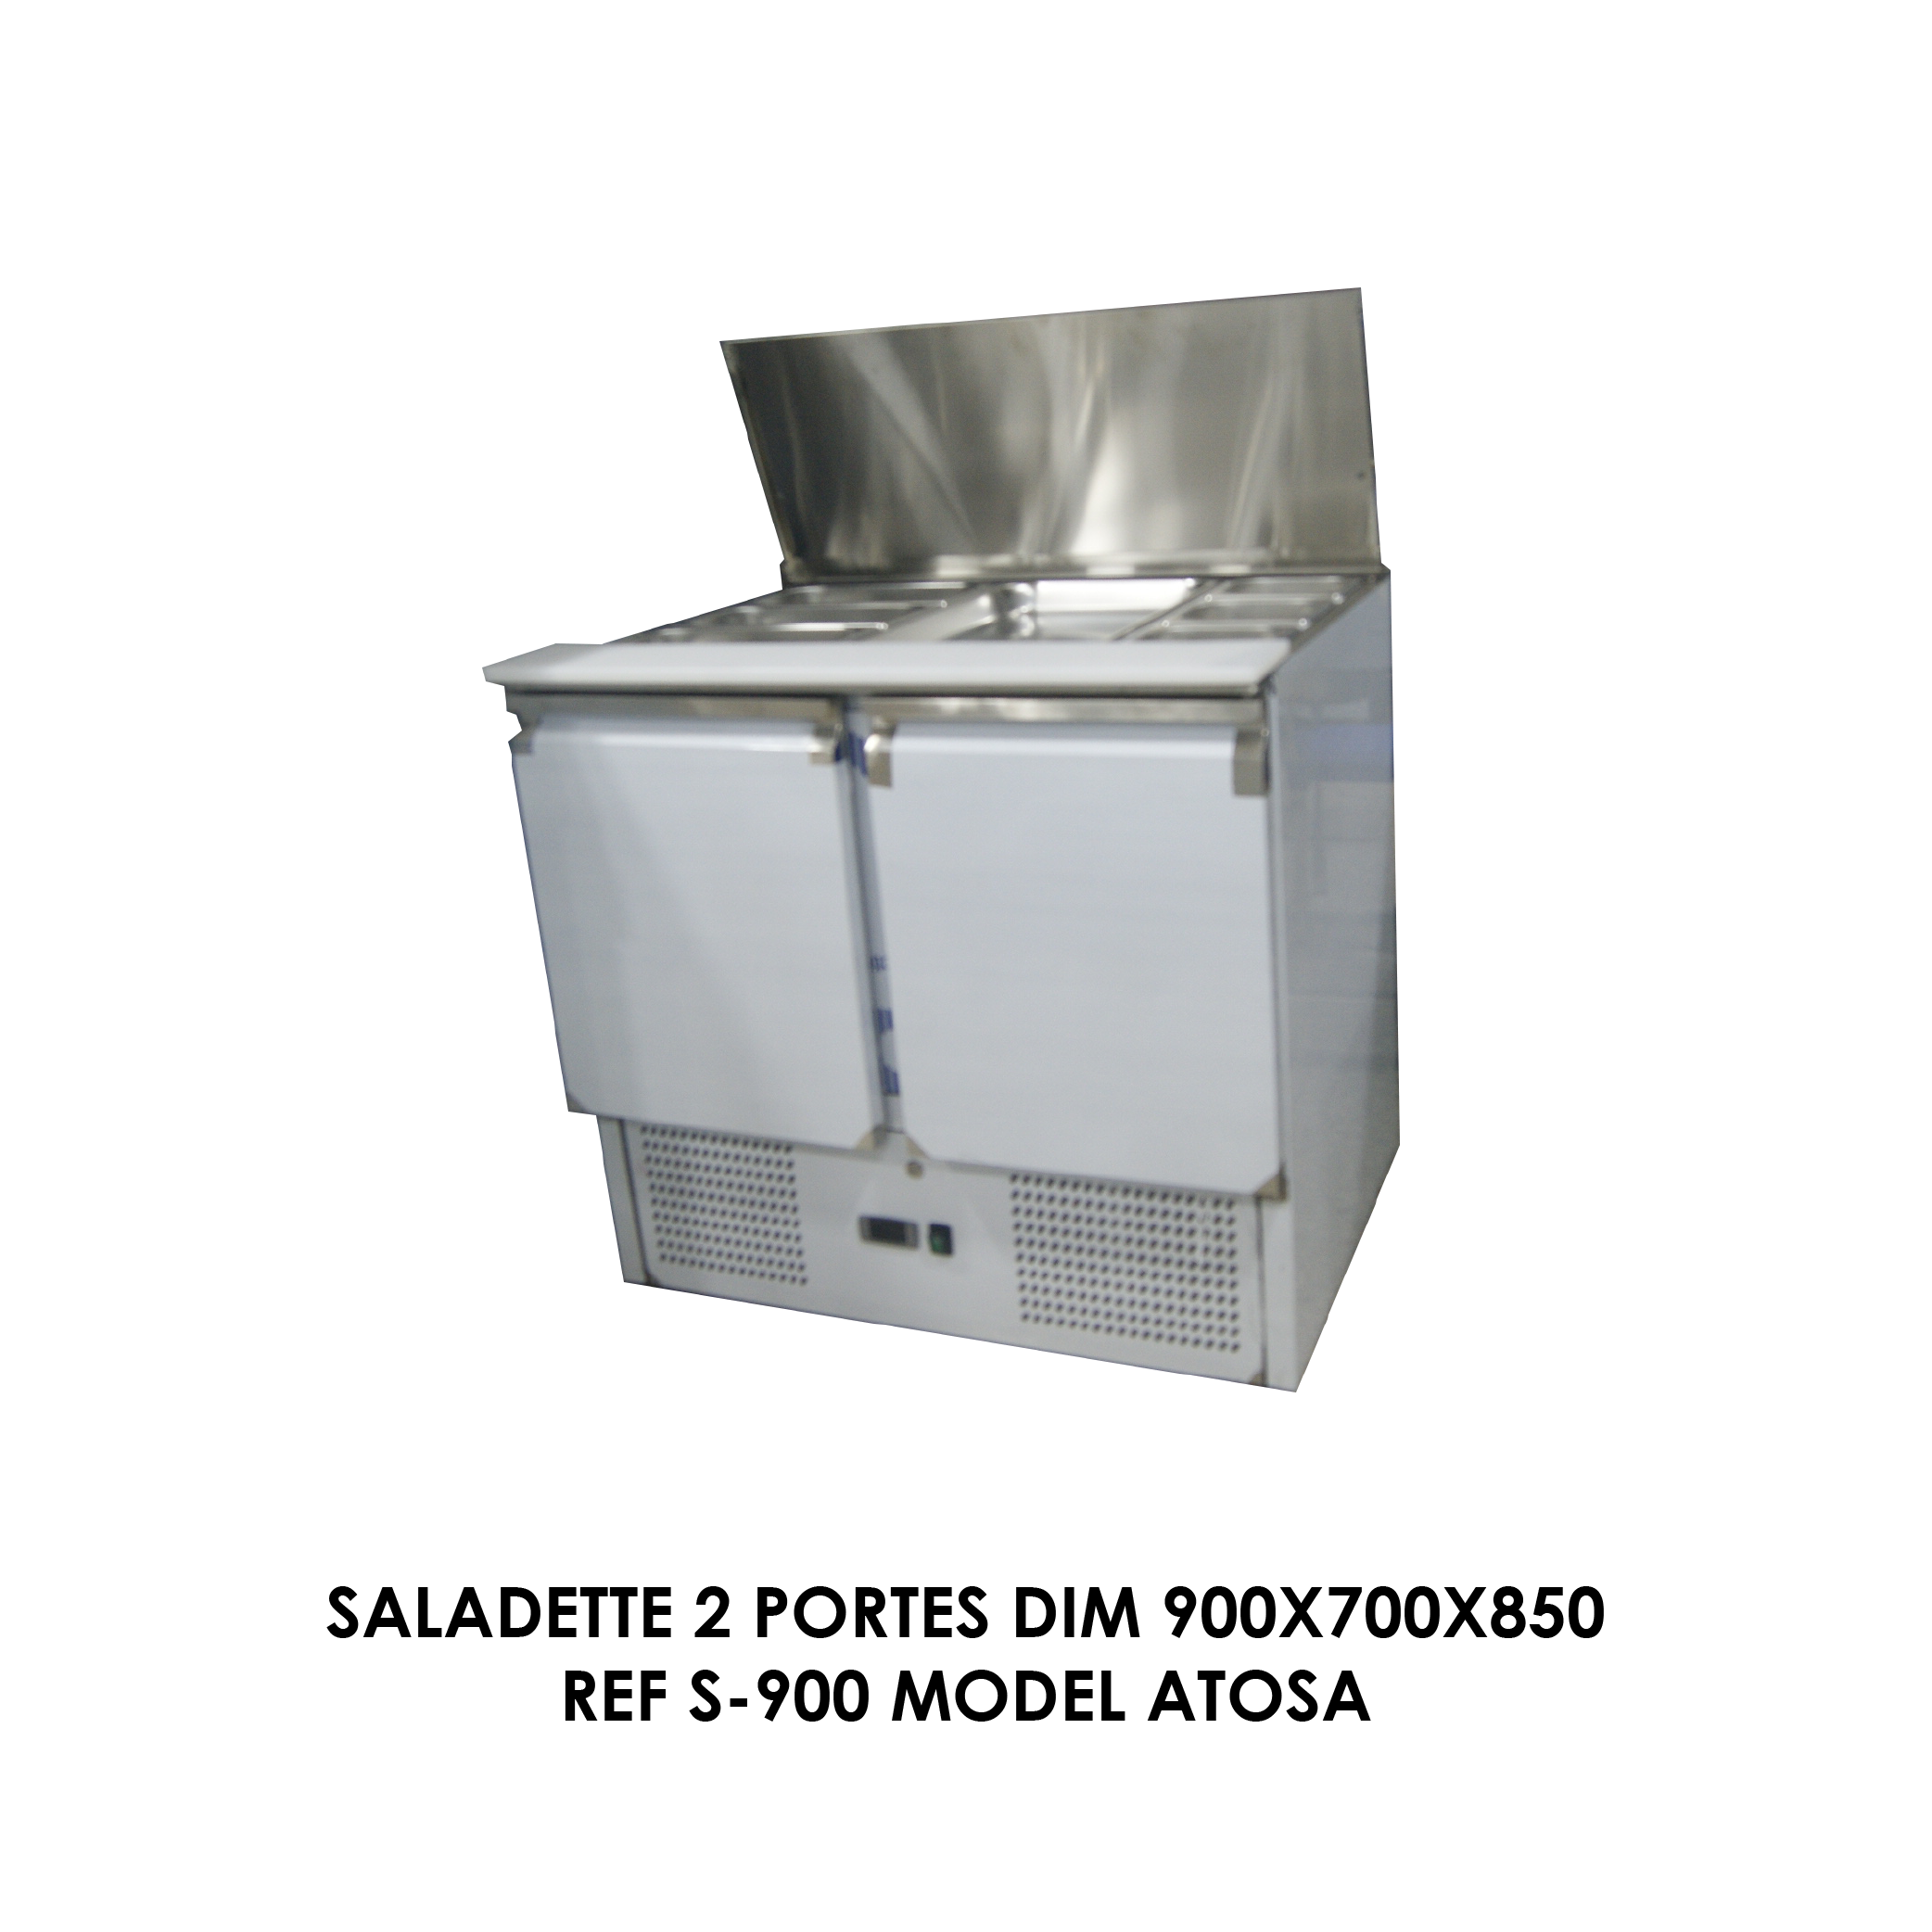 SALADETTE 2 PORTES DIM 900X700X850 REF S-900 MODEL ATOSA